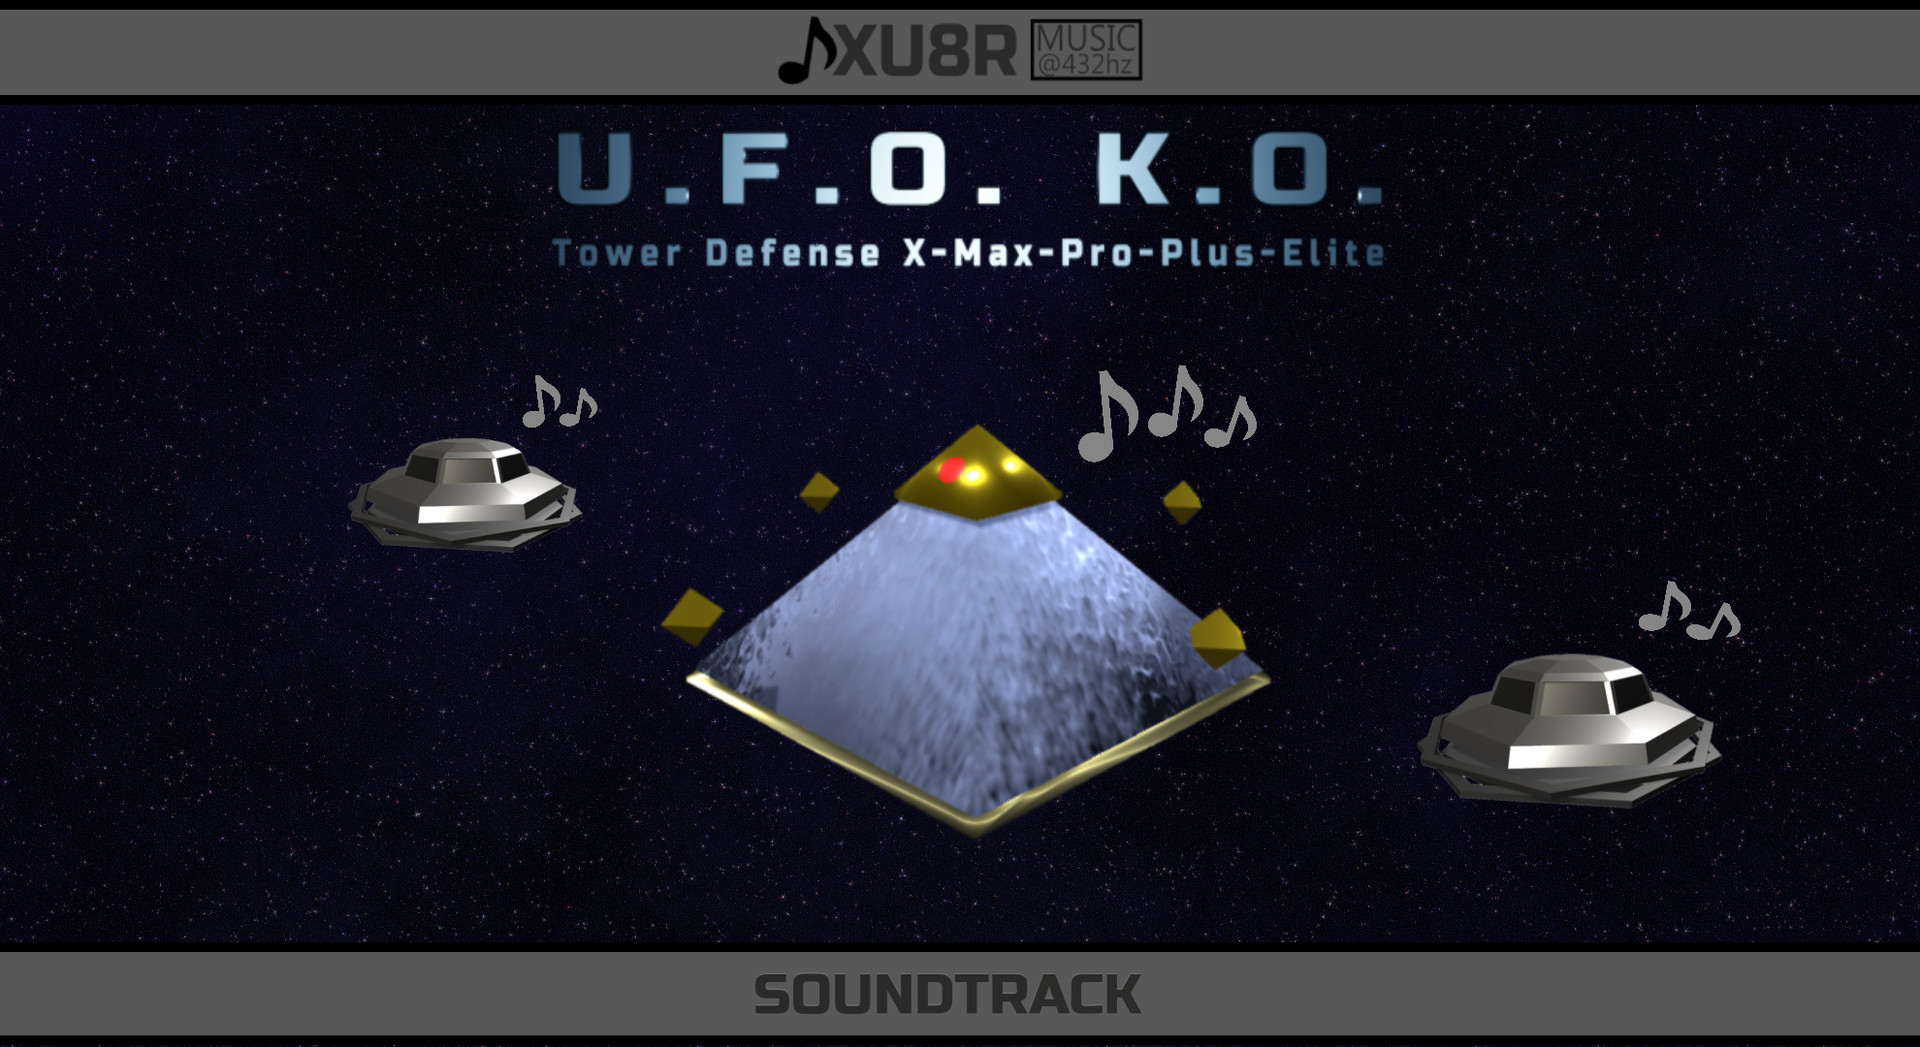 U.F.O. K.O. Tower Defense Soundtrack Featured Screenshot #1